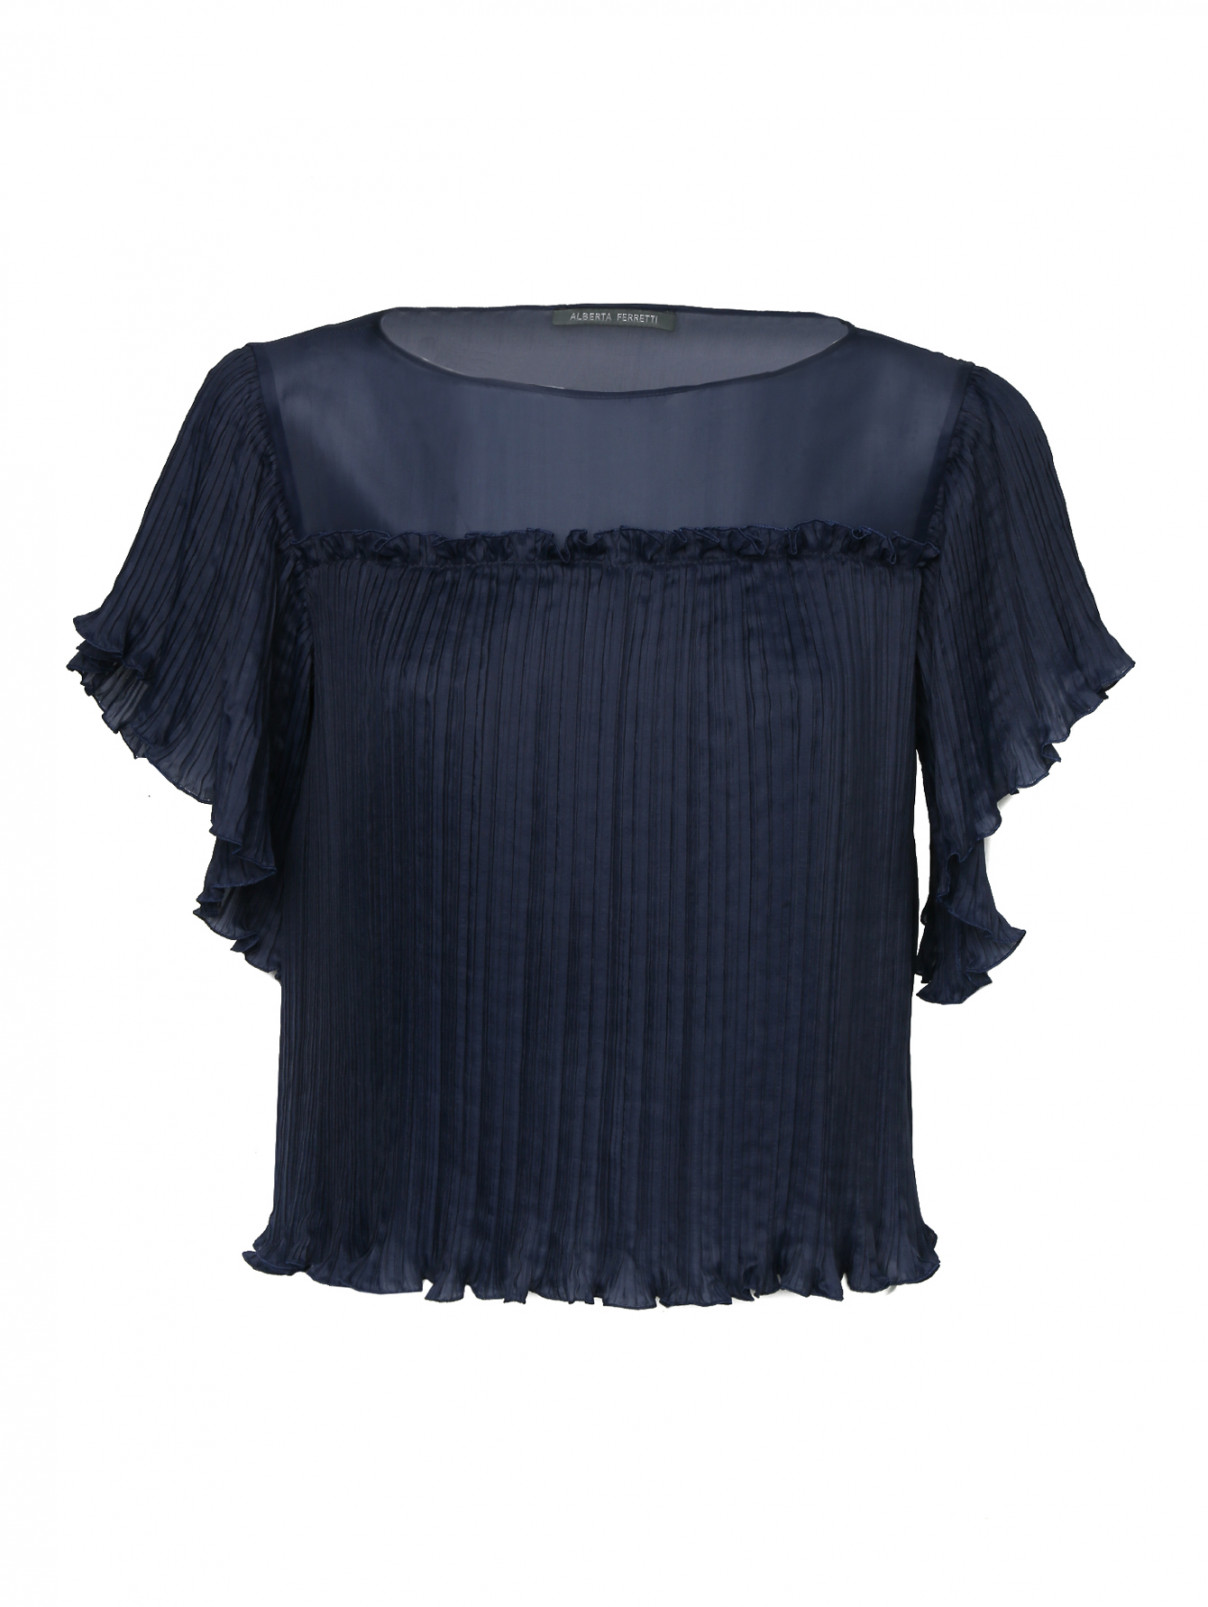 Блуза плиссе из шелка Alberta Ferretti  –  Общий вид  – Цвет:  Синий